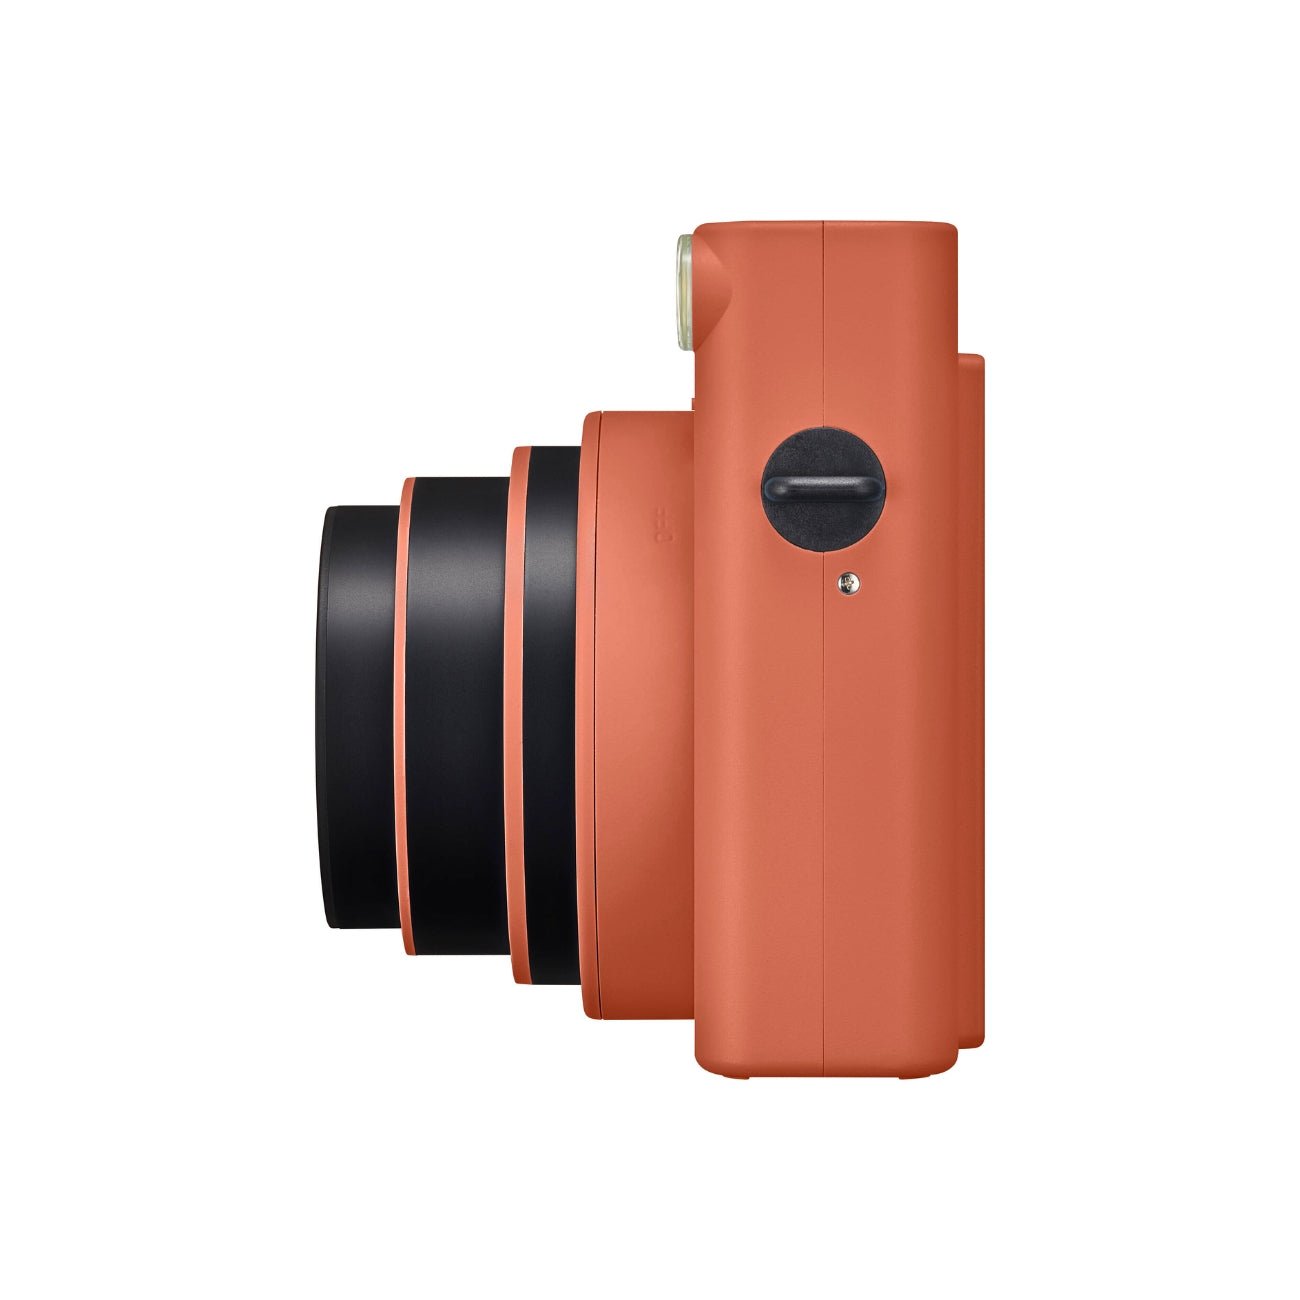 Fujifilm Instax SQUARE SQ1 Instant Film Camera